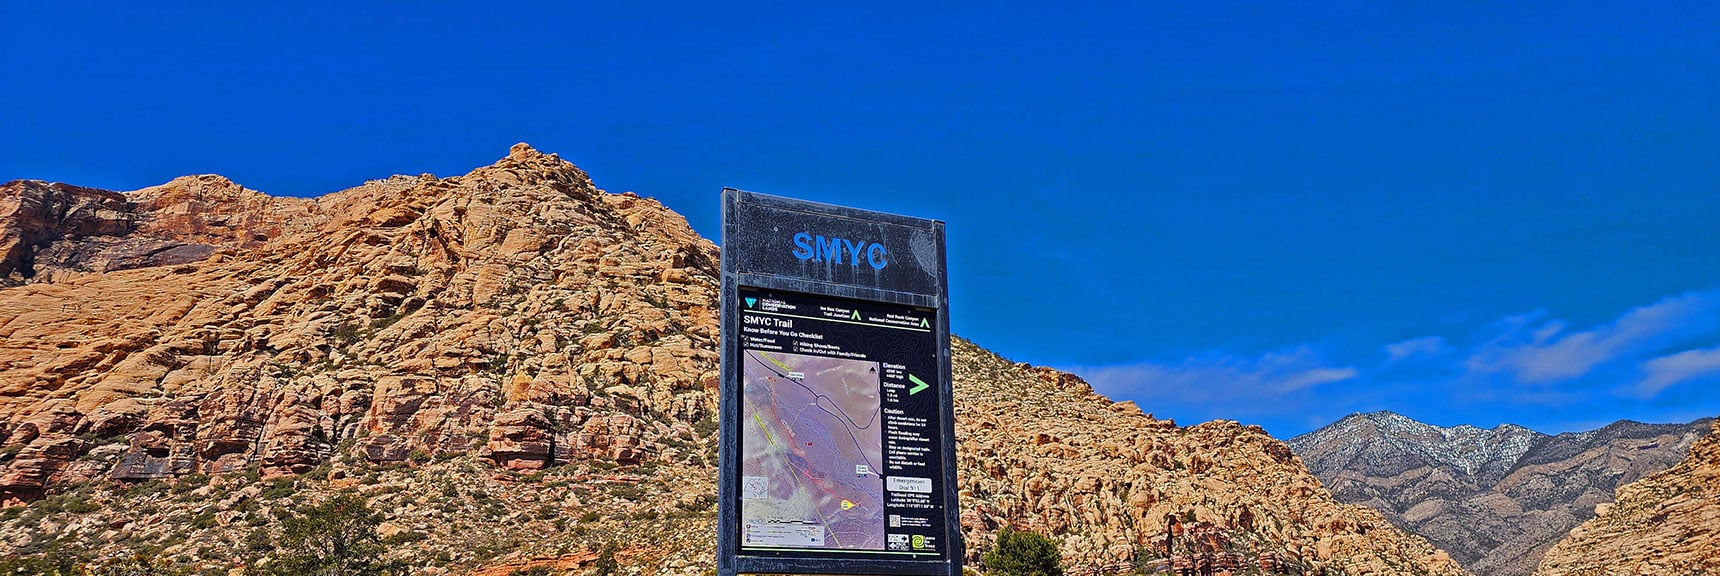 SMYC South Trailhead at Ice Box Canyon. Buffalo Wall Background | SMYC Trail | Red Rock Canyon National Conservation Area, Nevada | David Smith | LasVegasAreaTrails.com